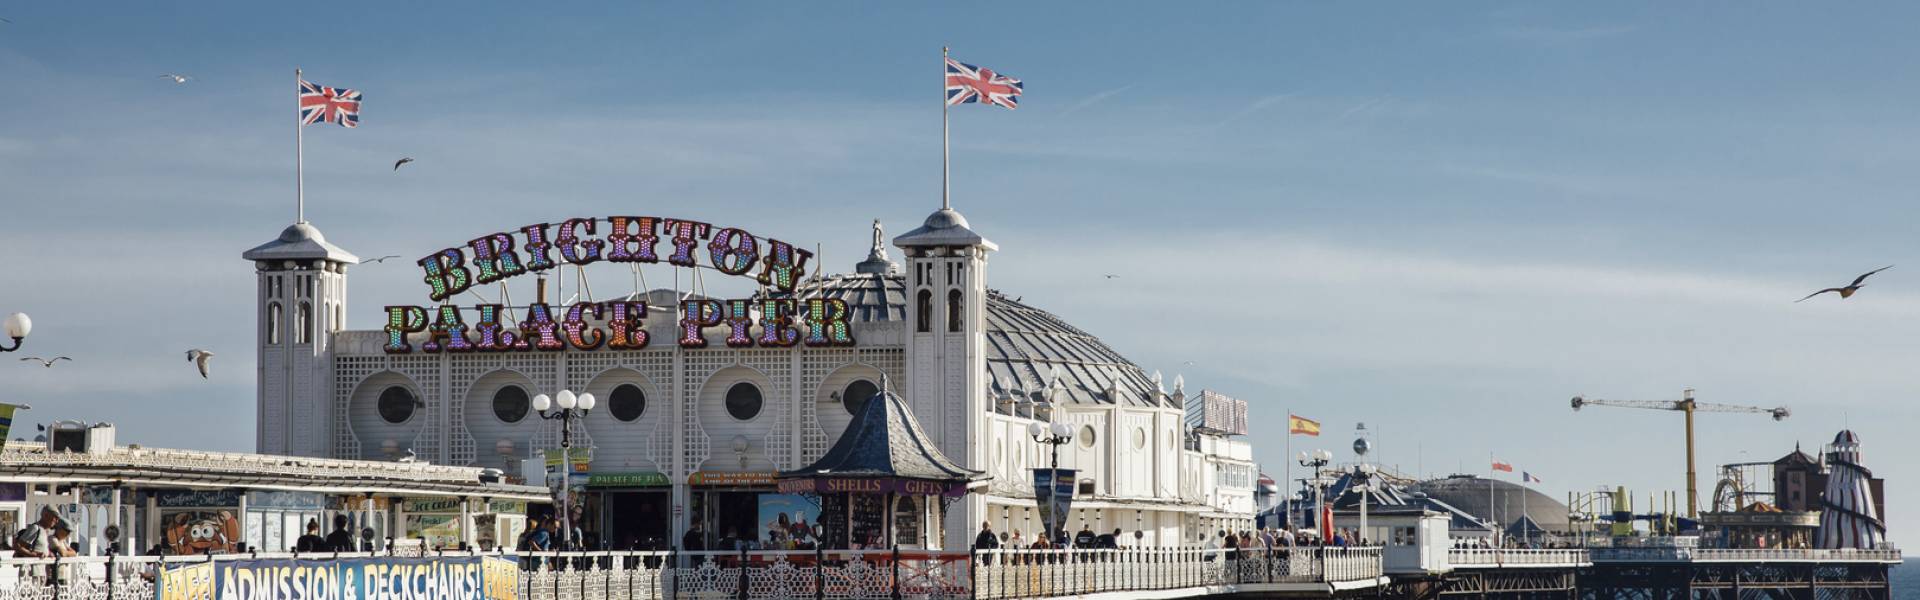 Brighton Palace Pier, Brighton, East Sussex, England.